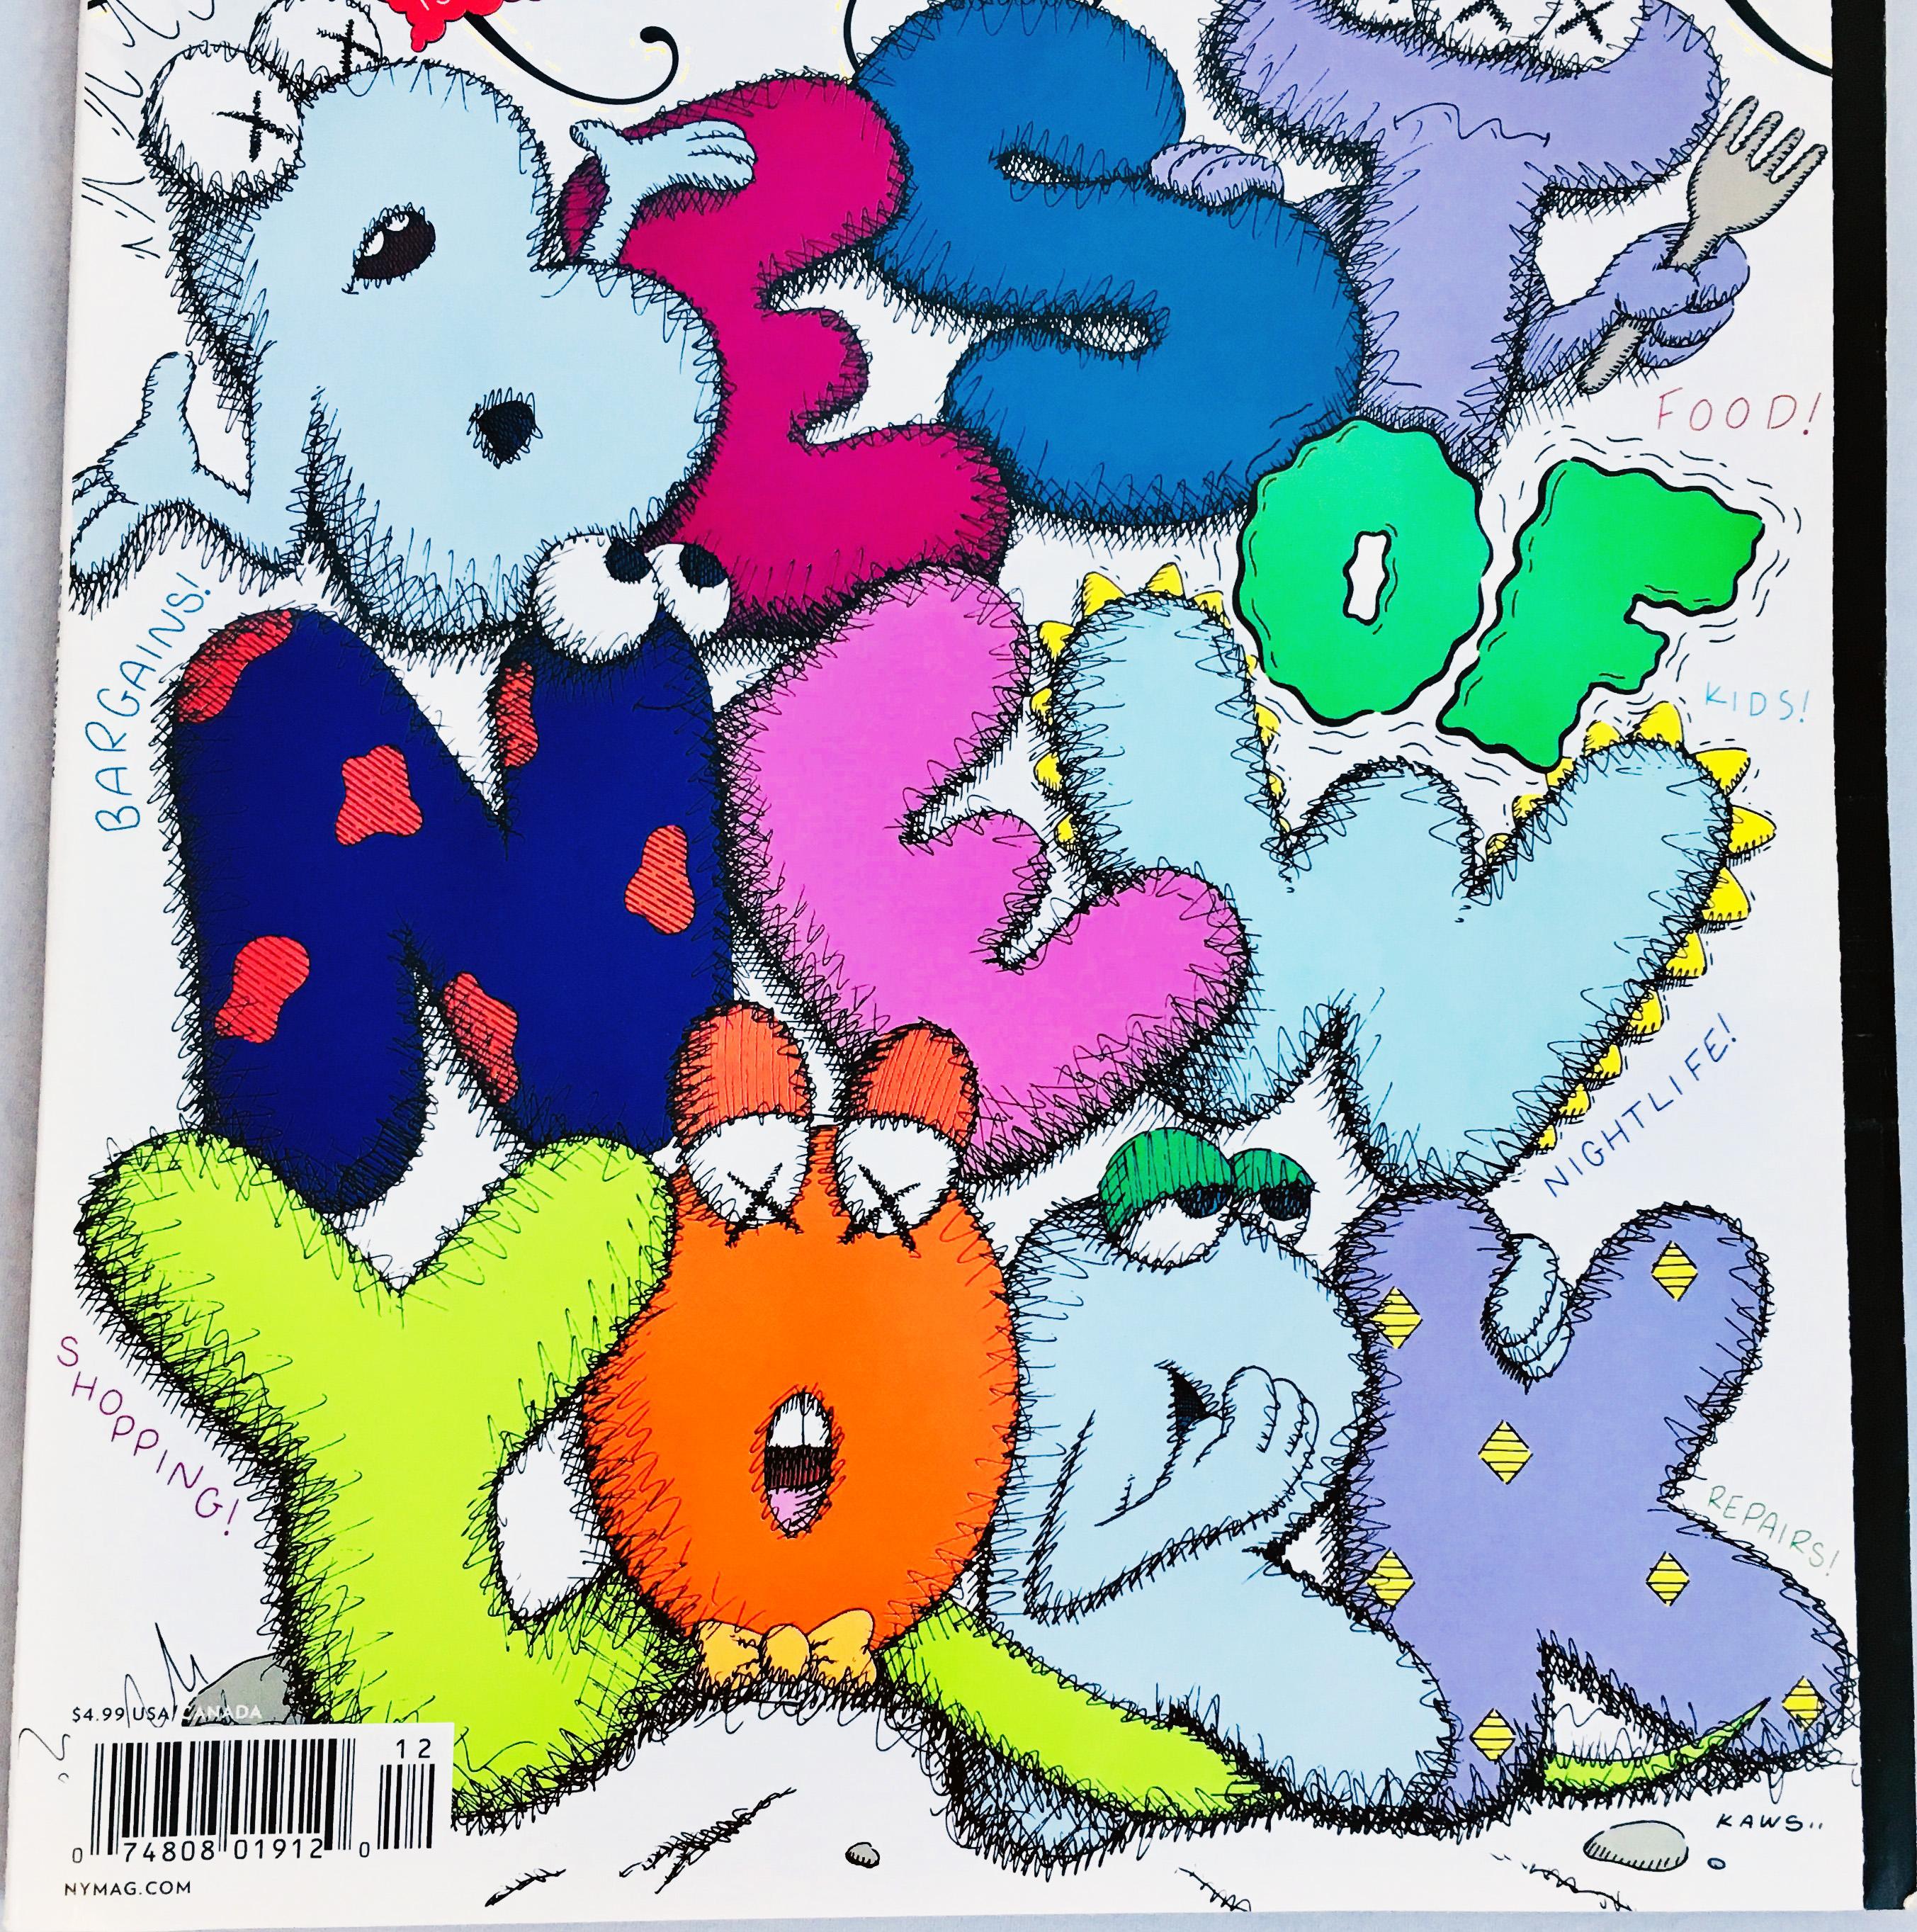 Kinetic Kaws Cover Art 'New York Magazine, 2009